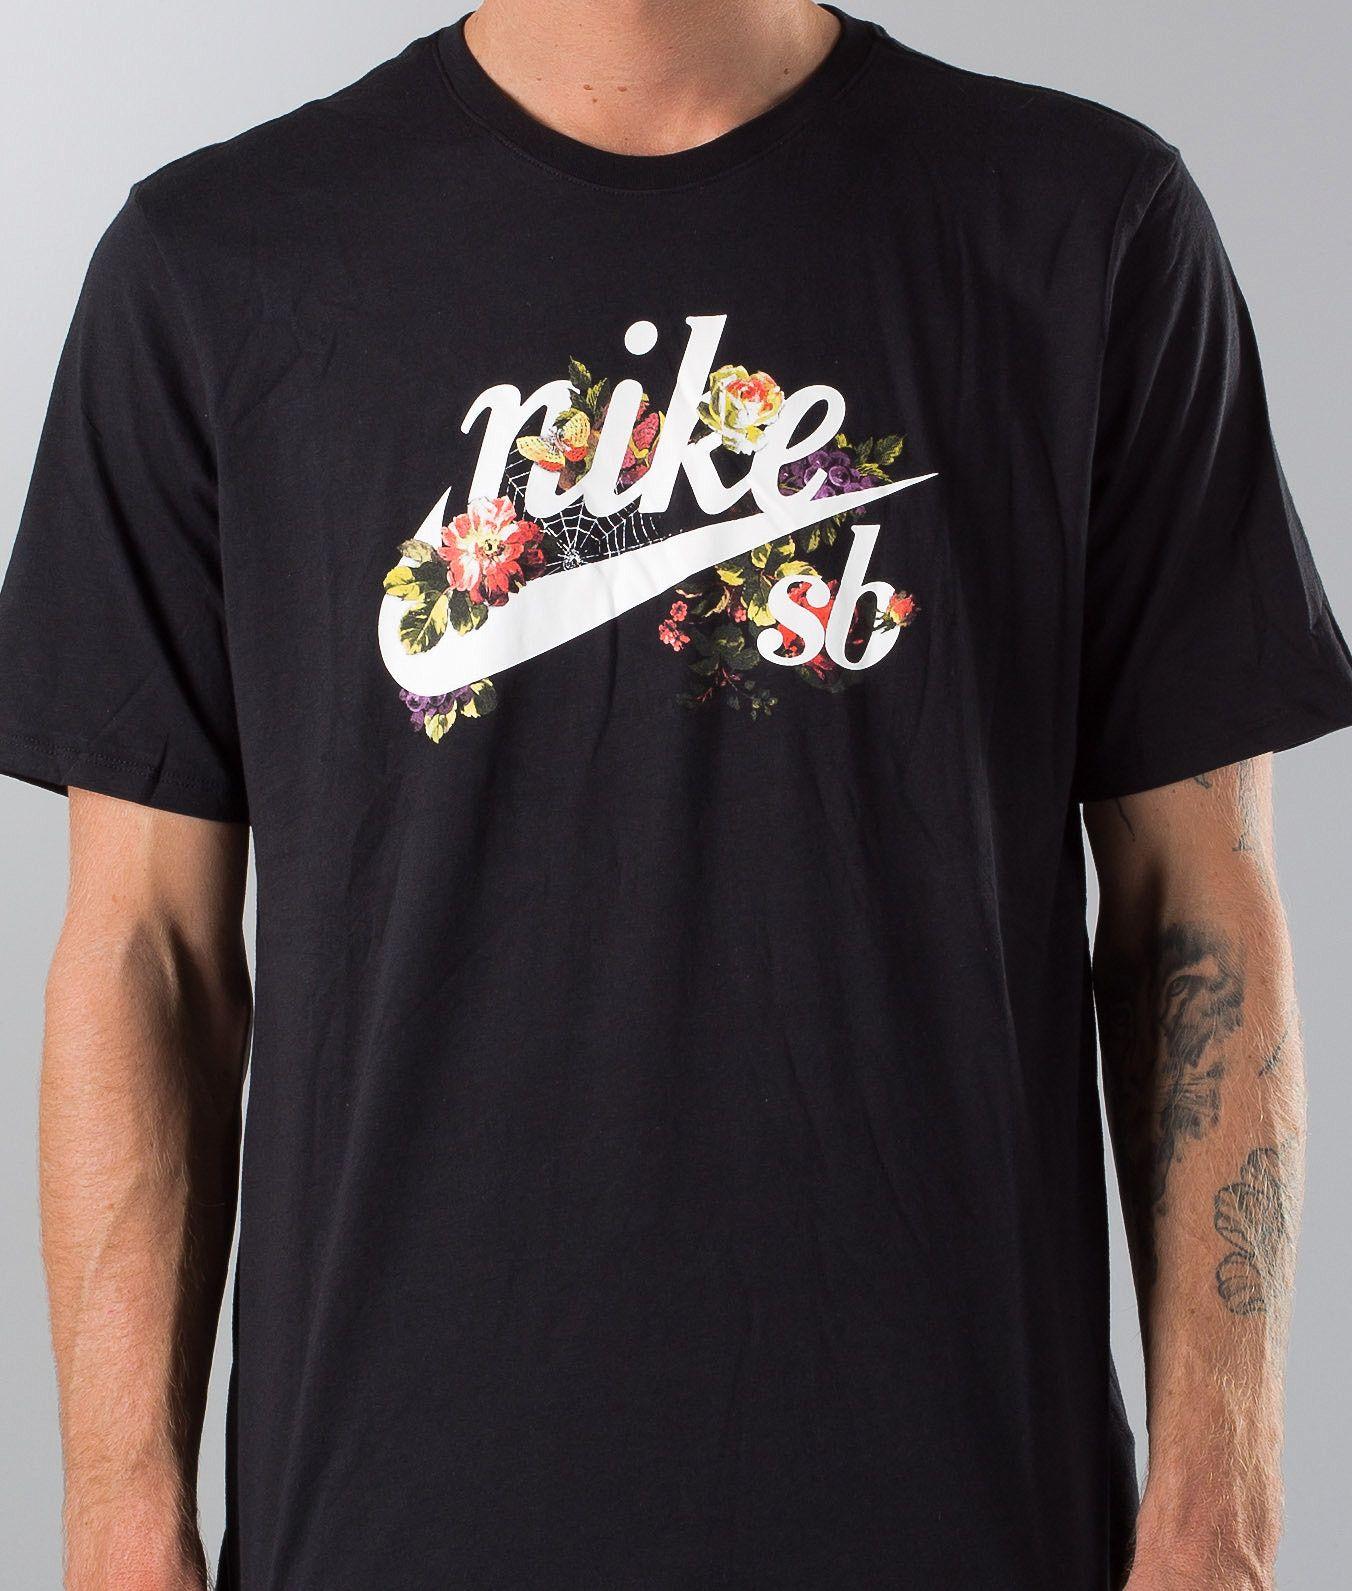 Nike Floral Logo - Nike Floral Logo T Shirt Black White